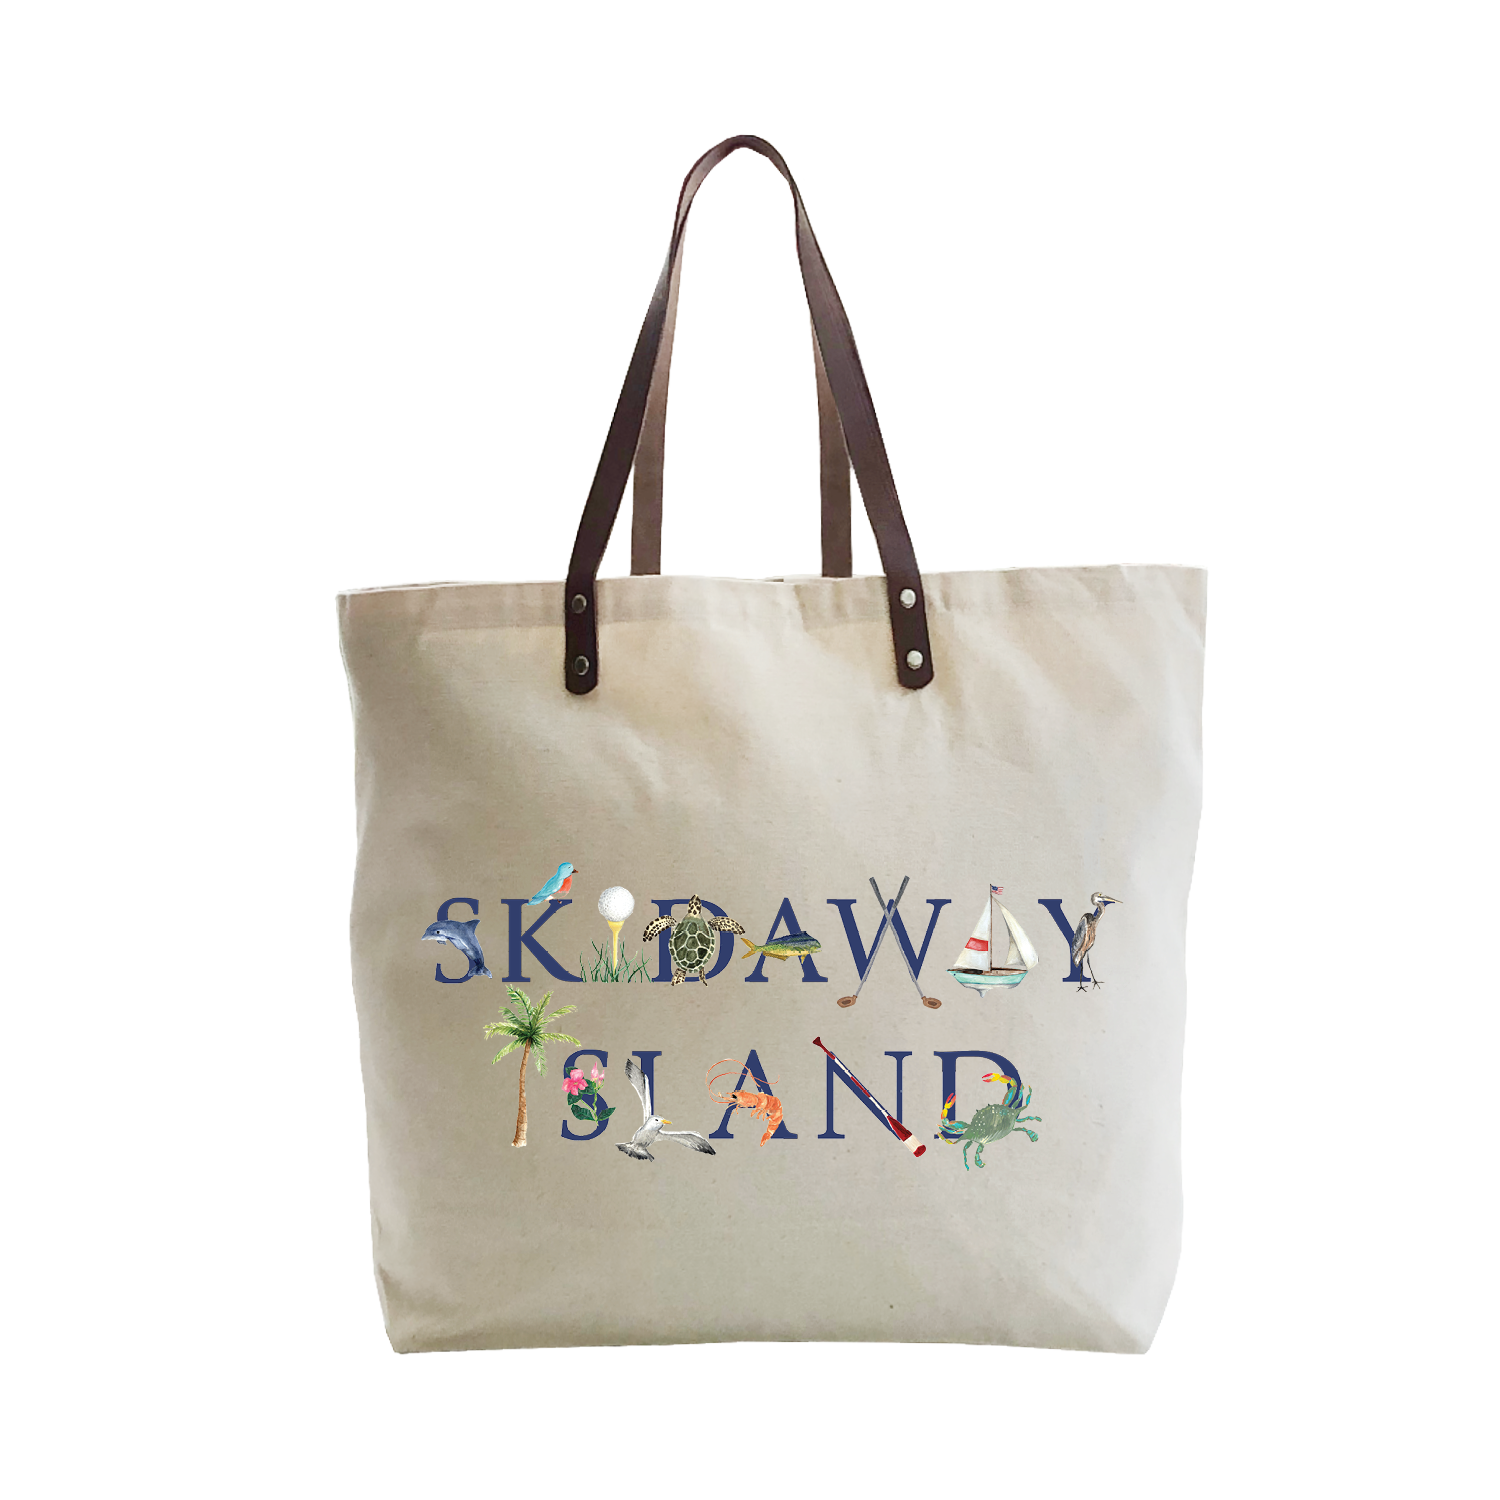 skidaway island large tote